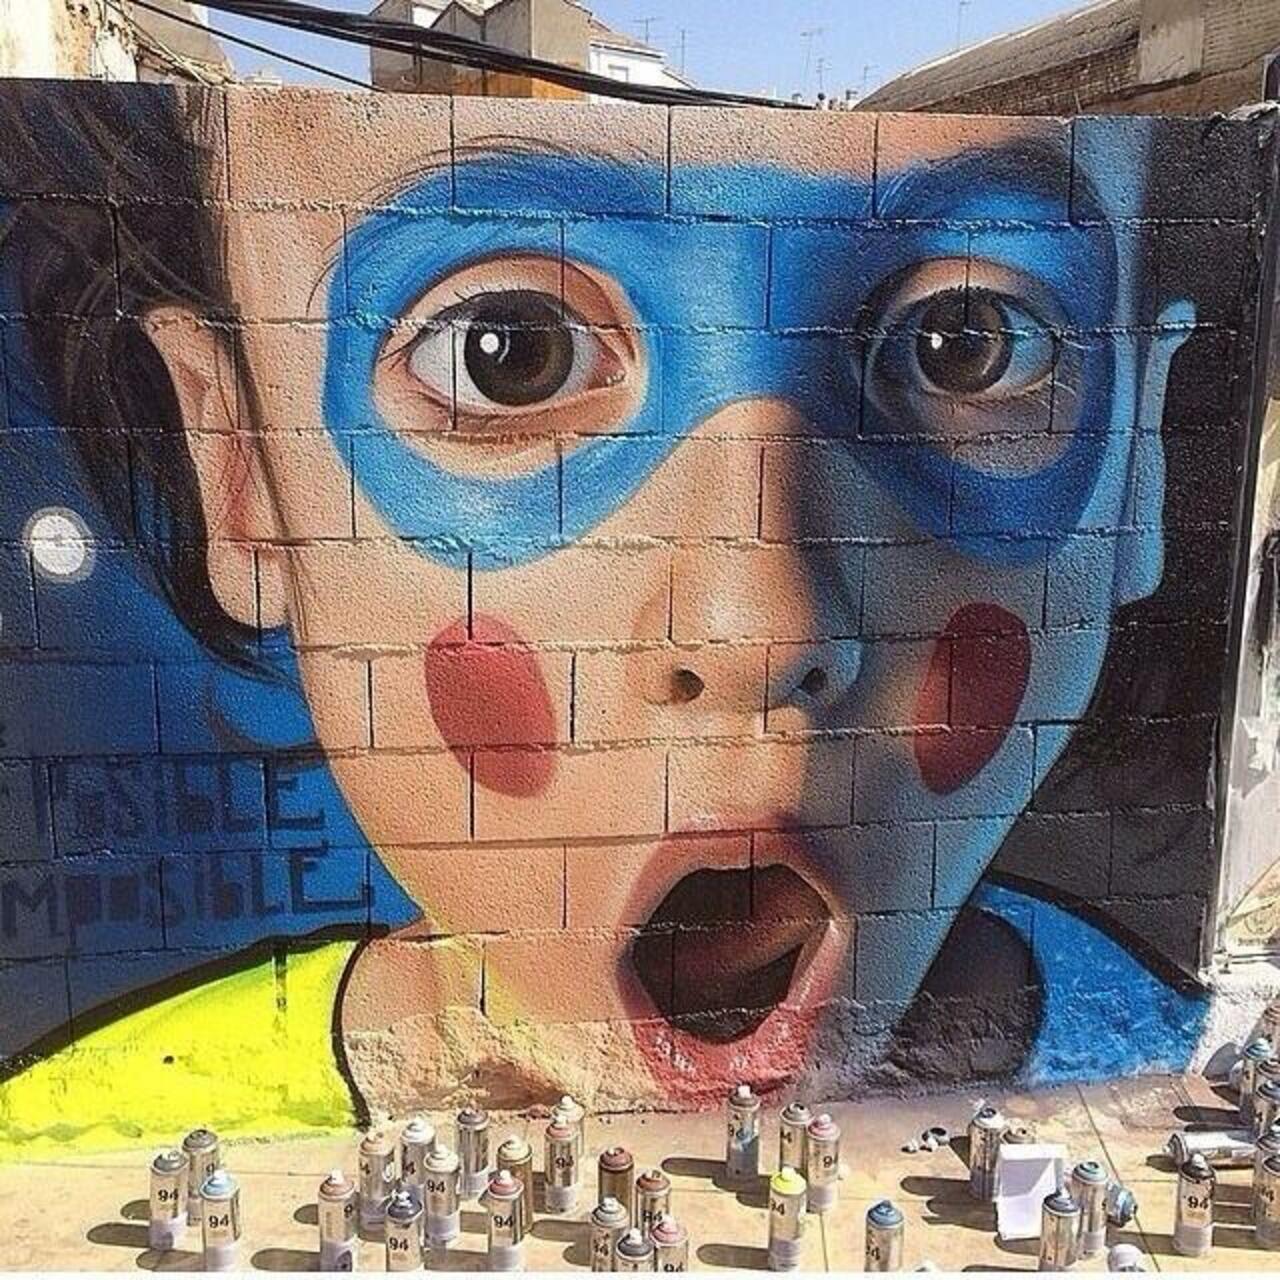 RT @designopinion: Artist @Belinwan unique Street Art portrait piece located in Linares, Spain #art #mural #graffiti #streetart http://t.co/6epDZ6qXwM